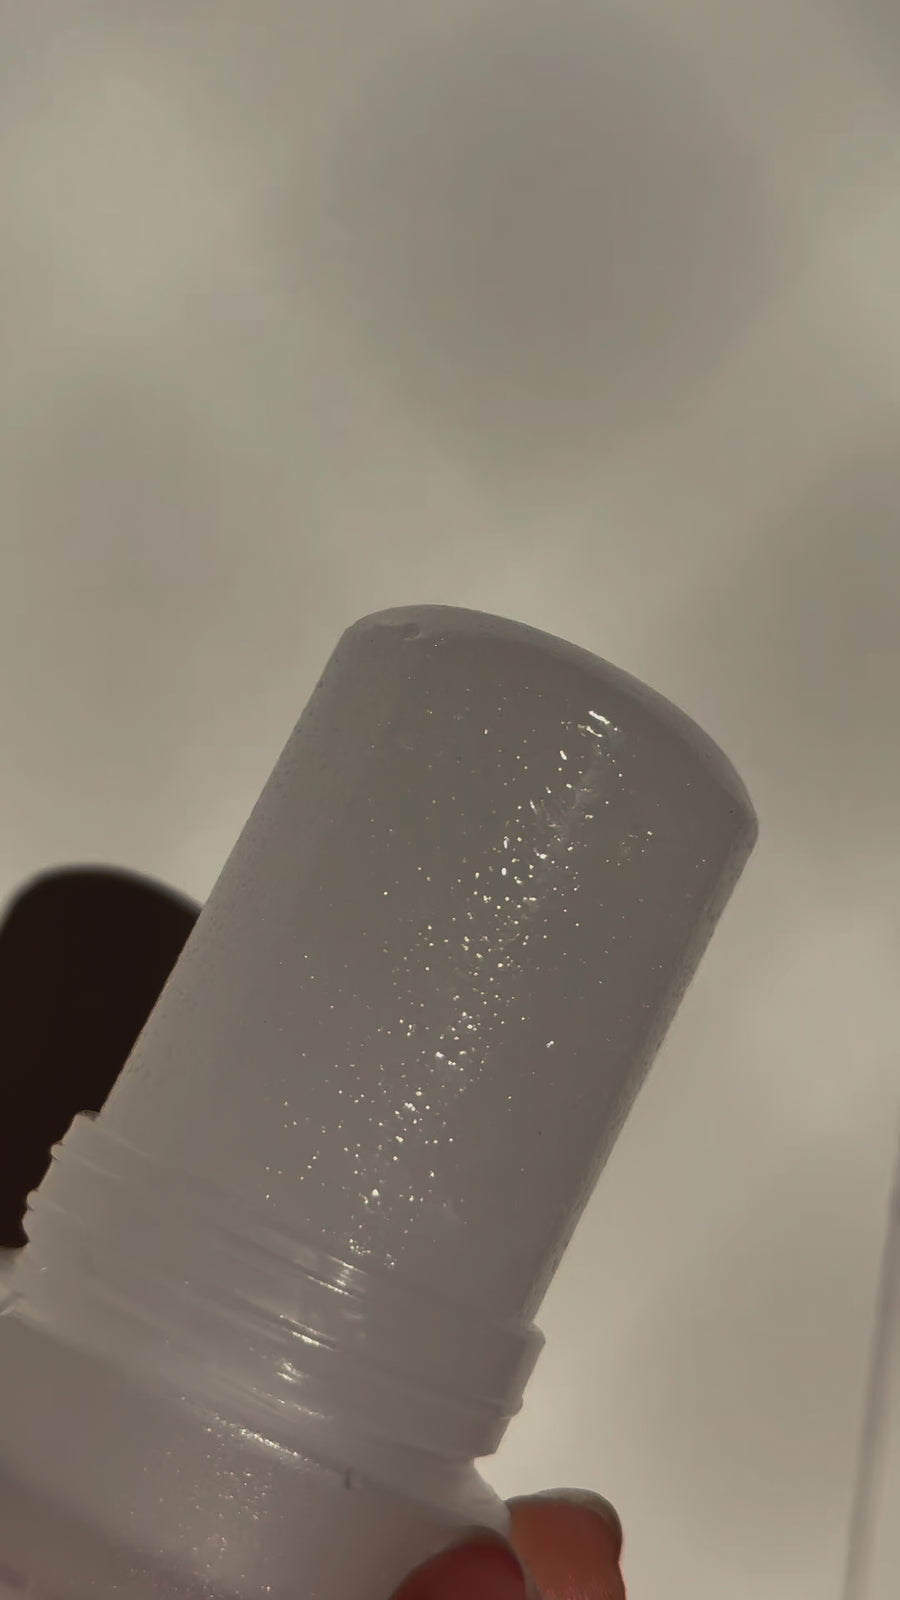 Desodorante Cristal Stick Vegano 60g Alva